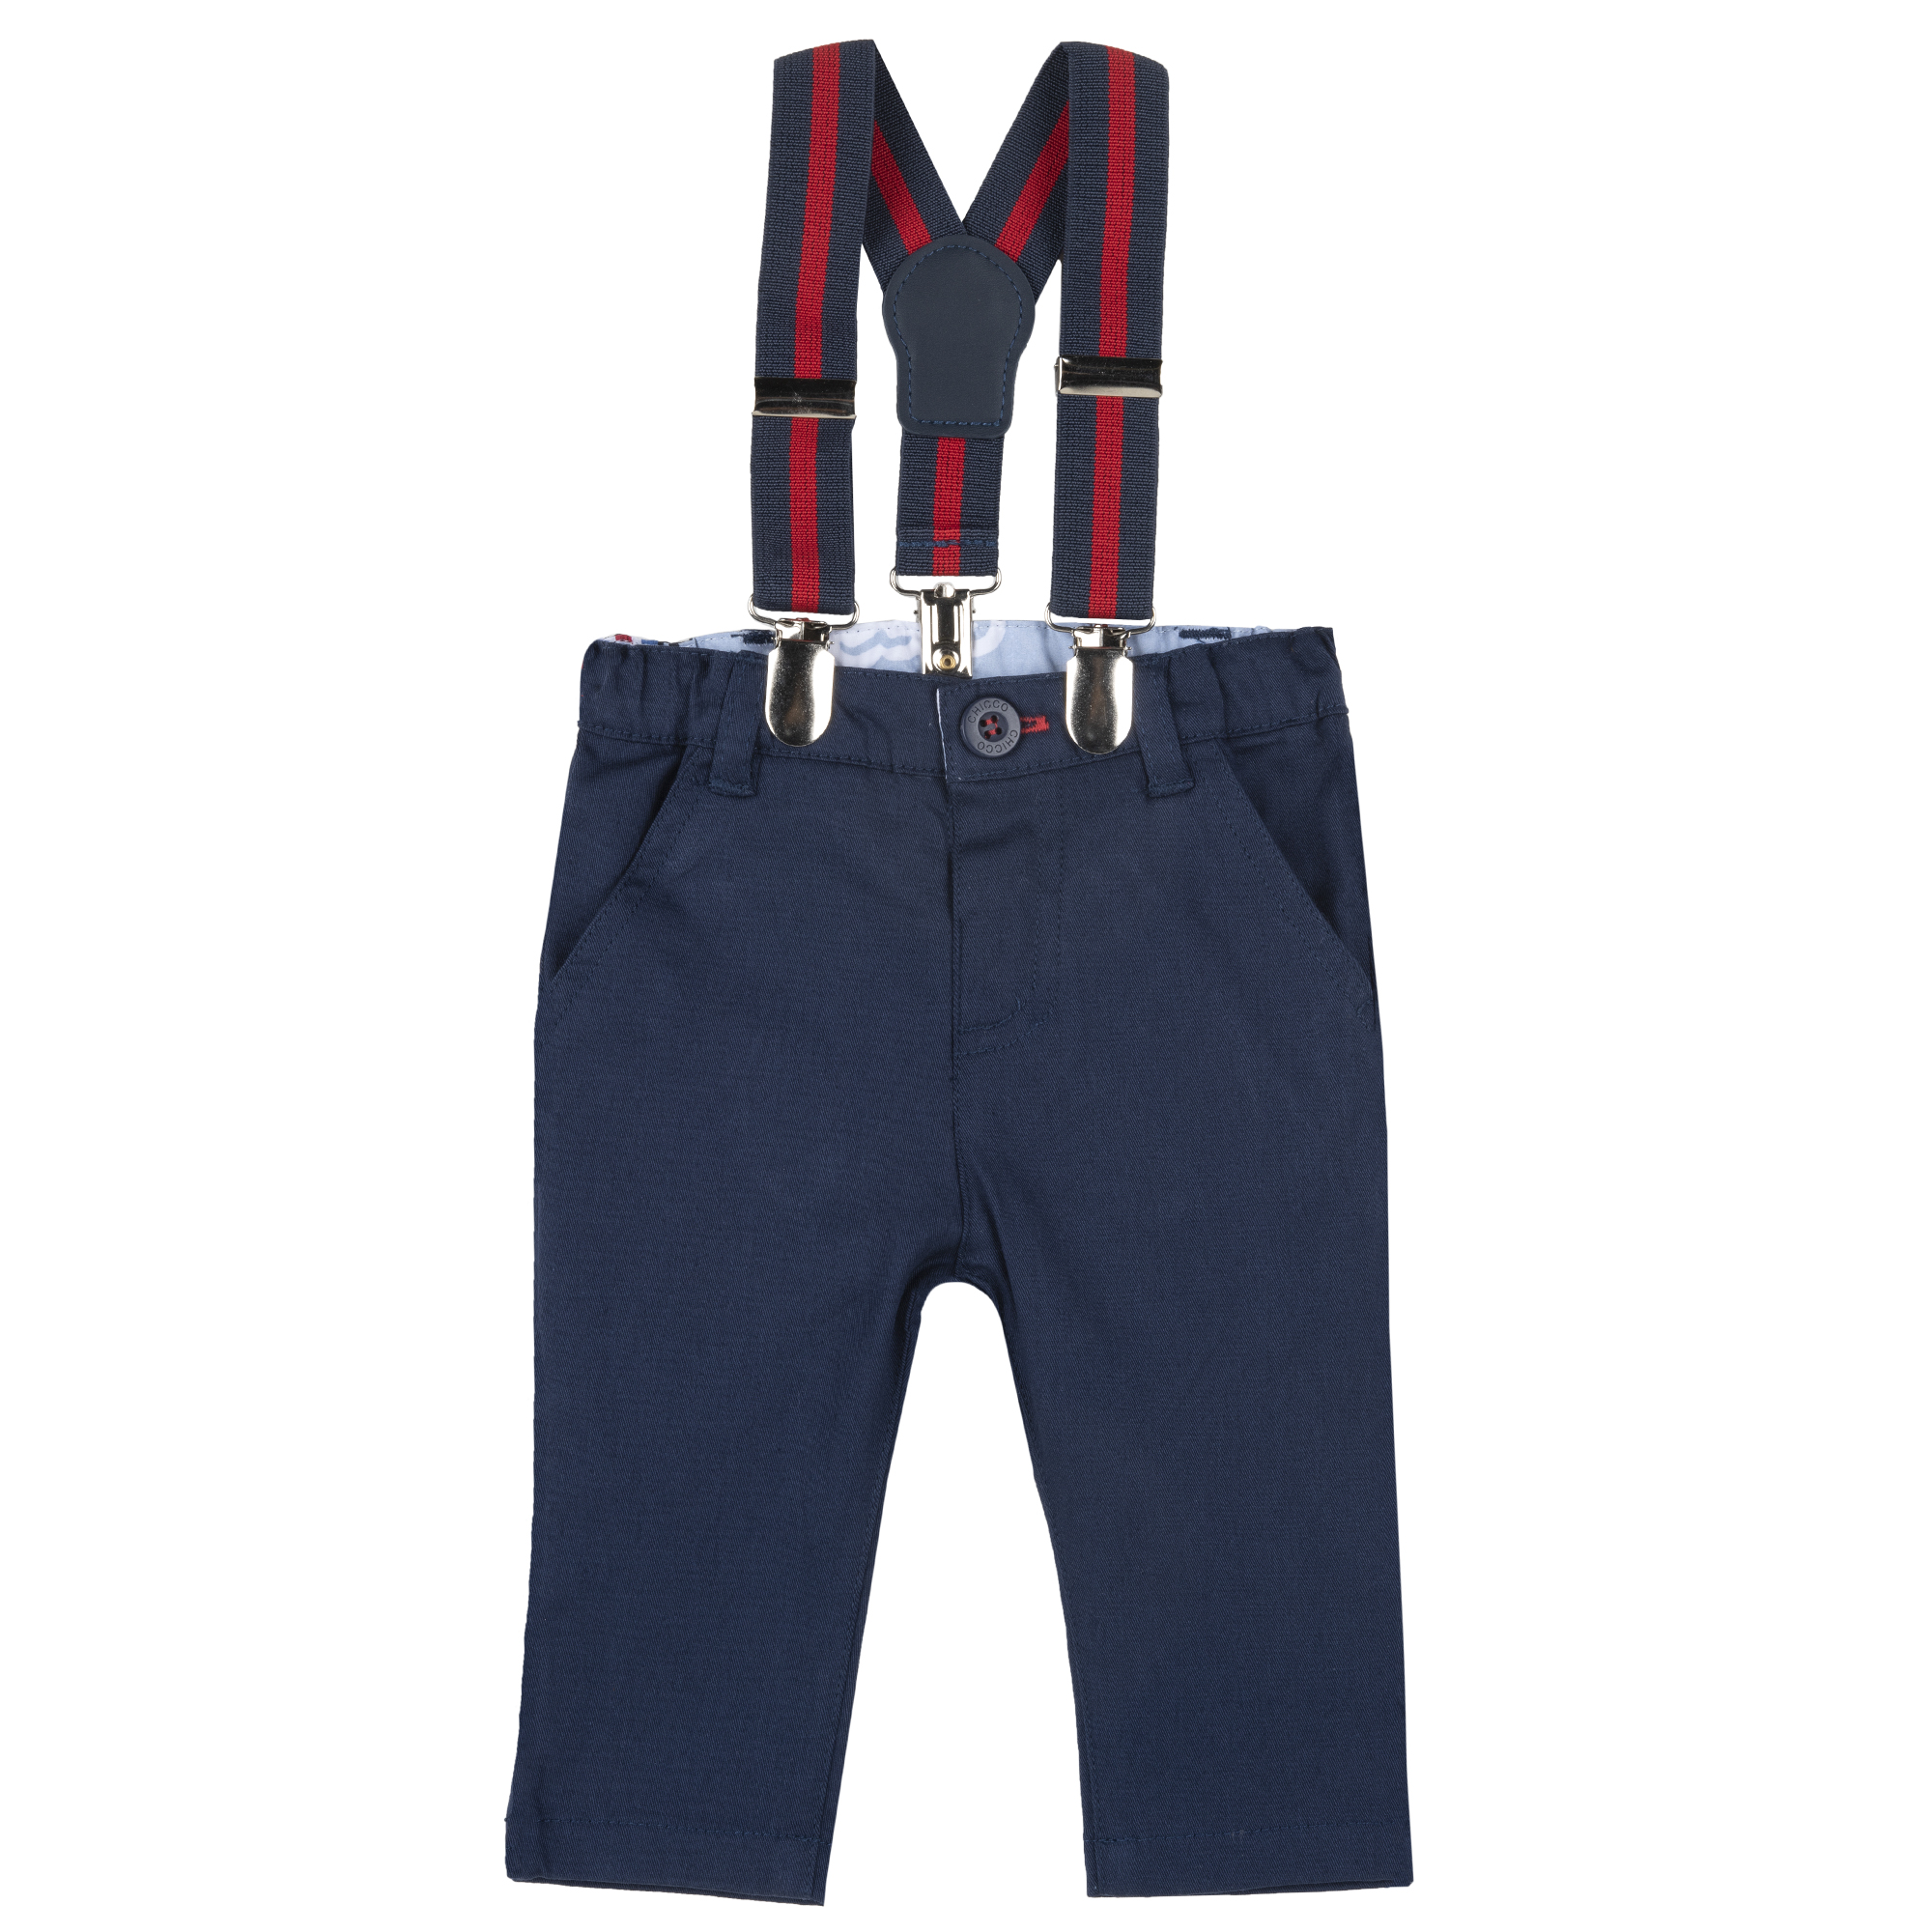 Pantaloni Copii Chicco Cu Bretele, Albastru, 08633